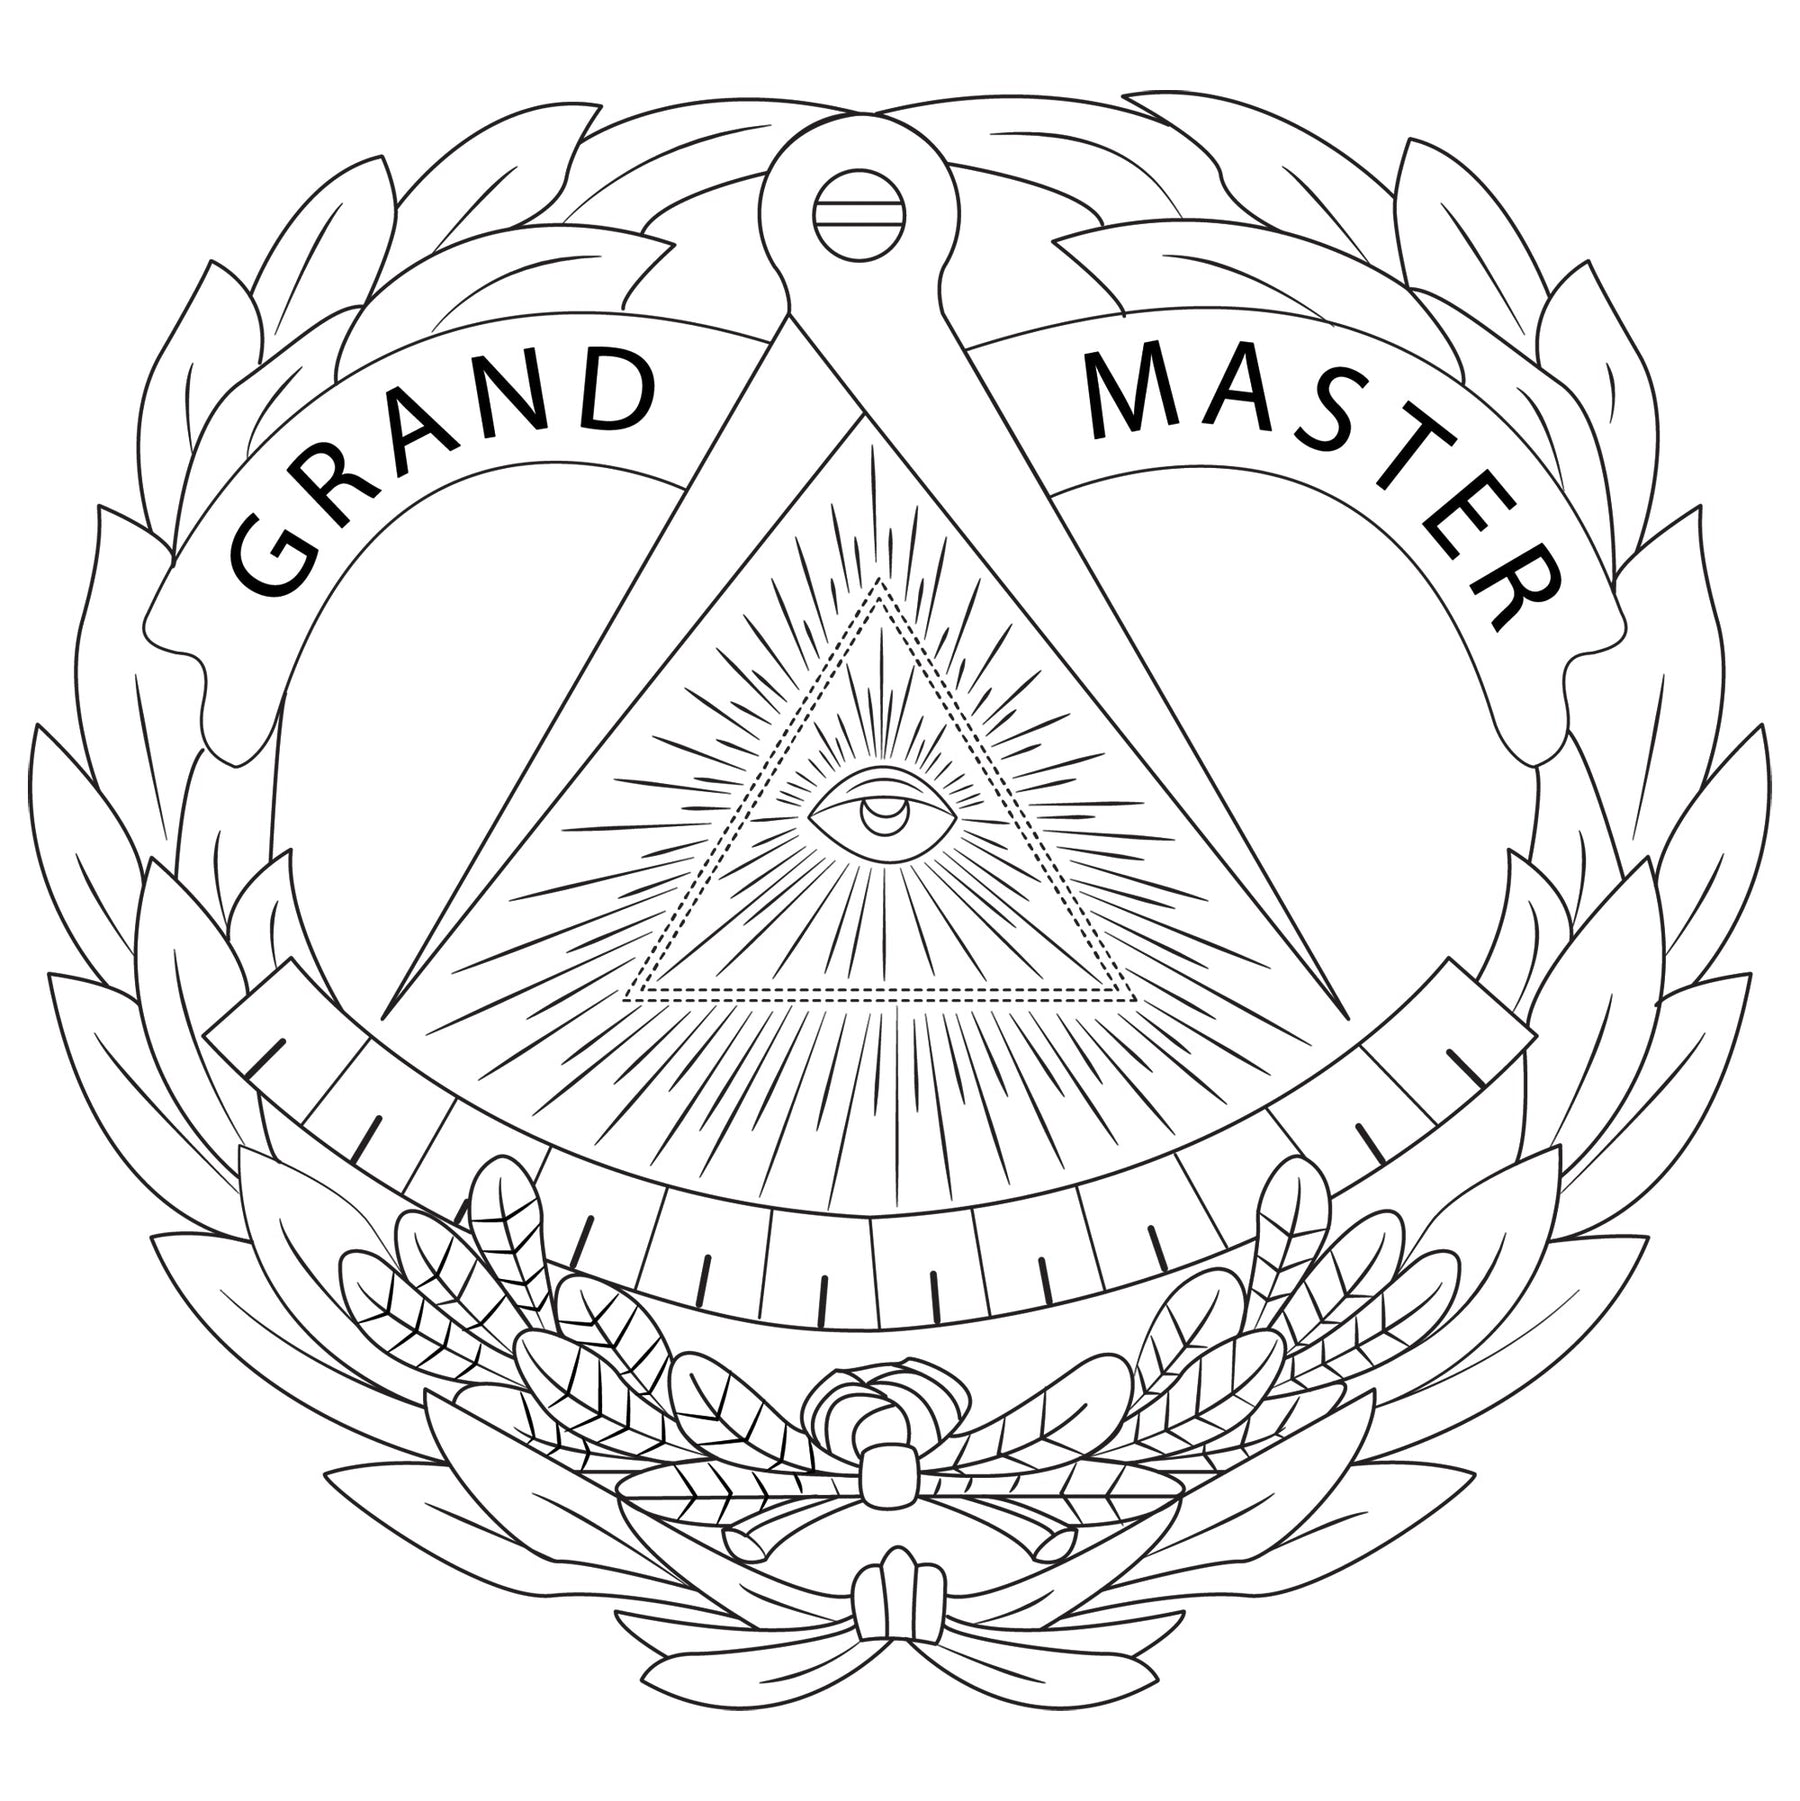 Grand Master Blue Lodge Decanter - 23 oz. Whiskey Glass - Bricks Masons